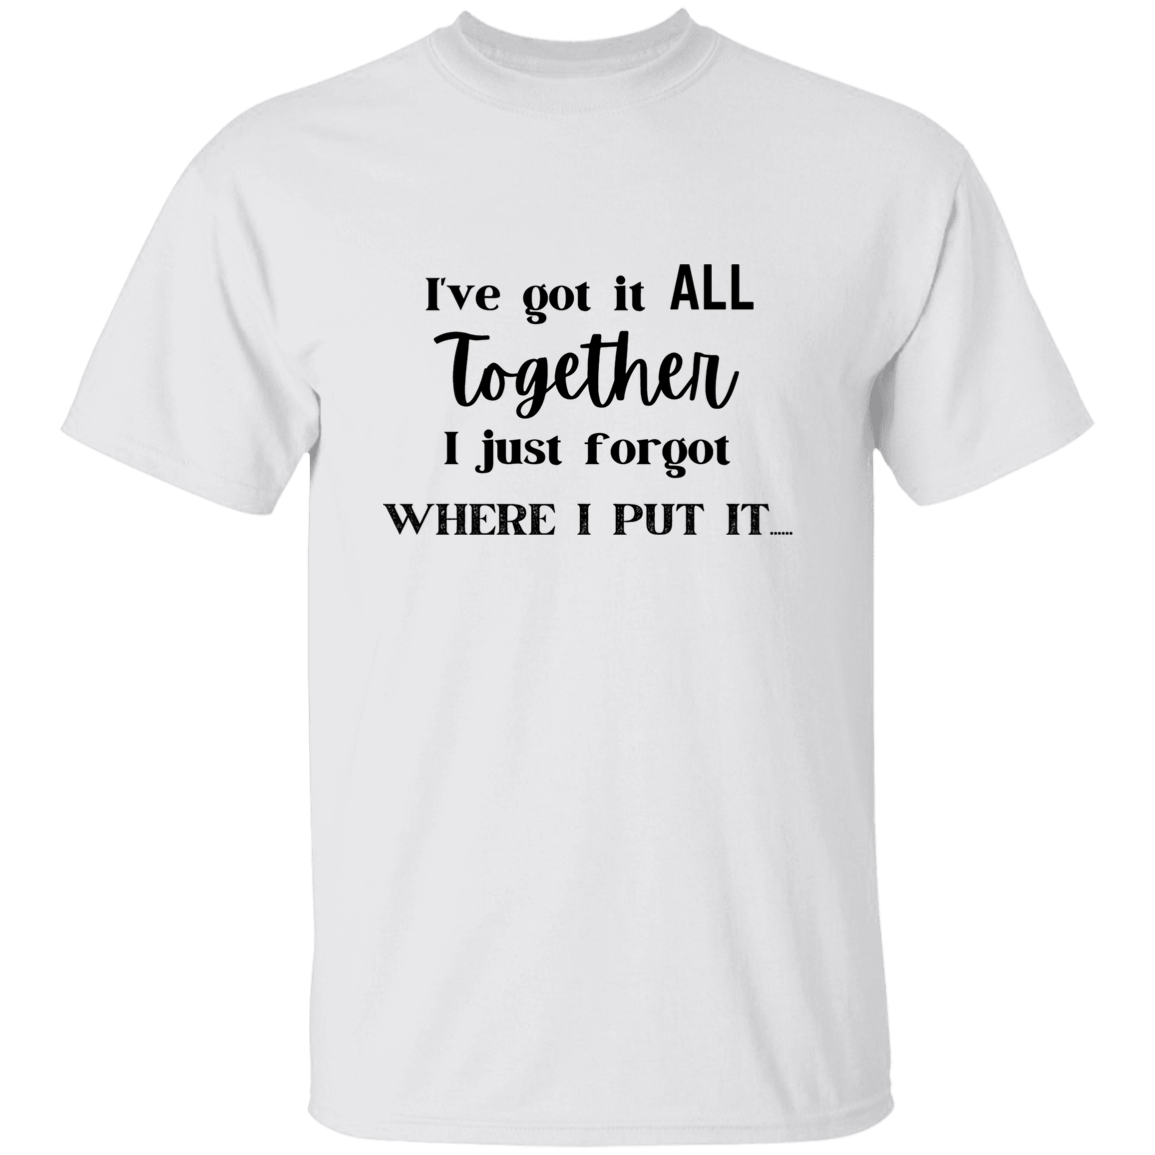 I've got it all together T-Shirt, Novelty T-shirt, Sarcastic T-shirt